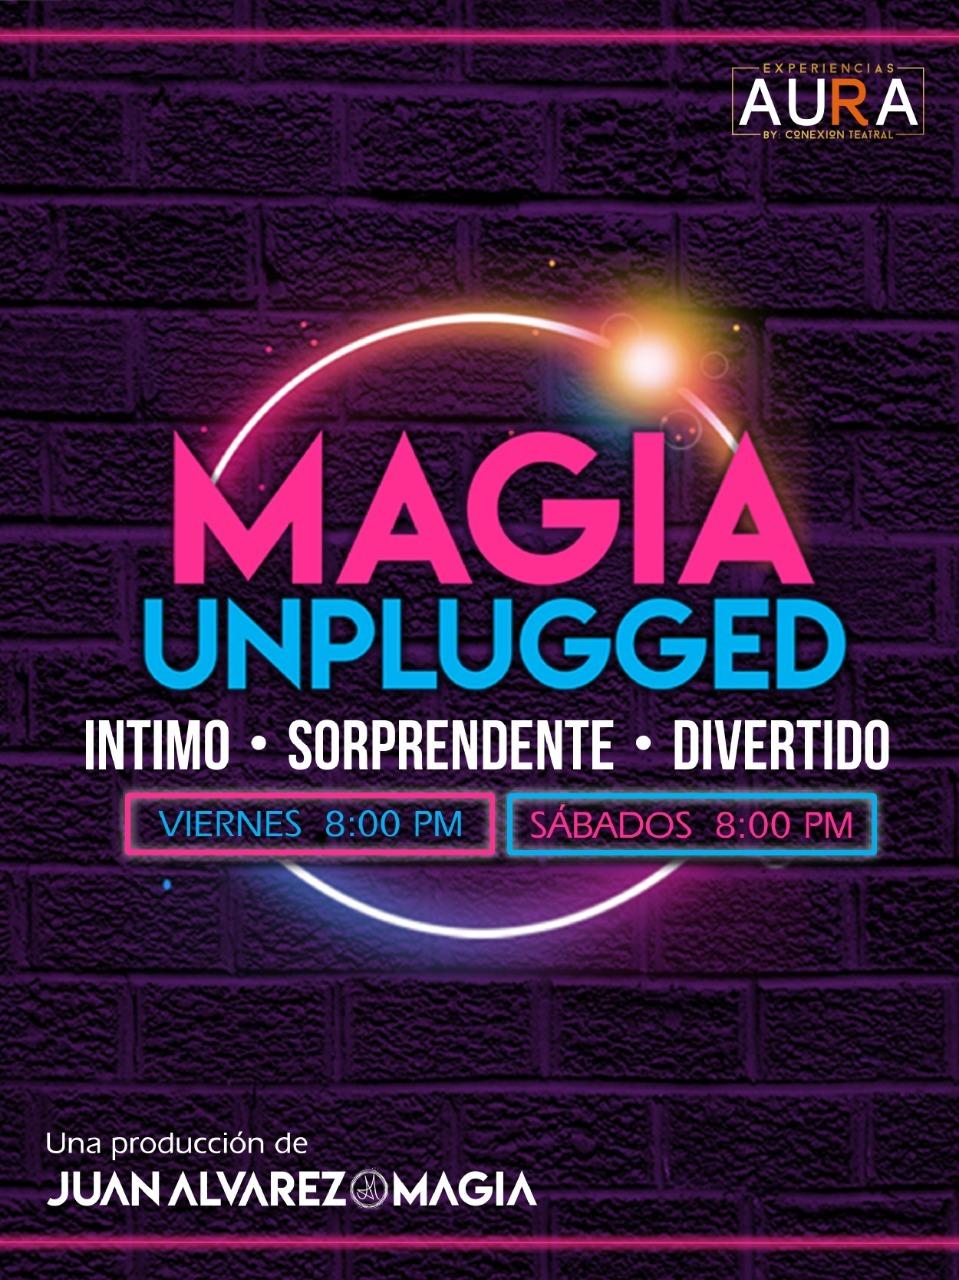 Magia unplugged